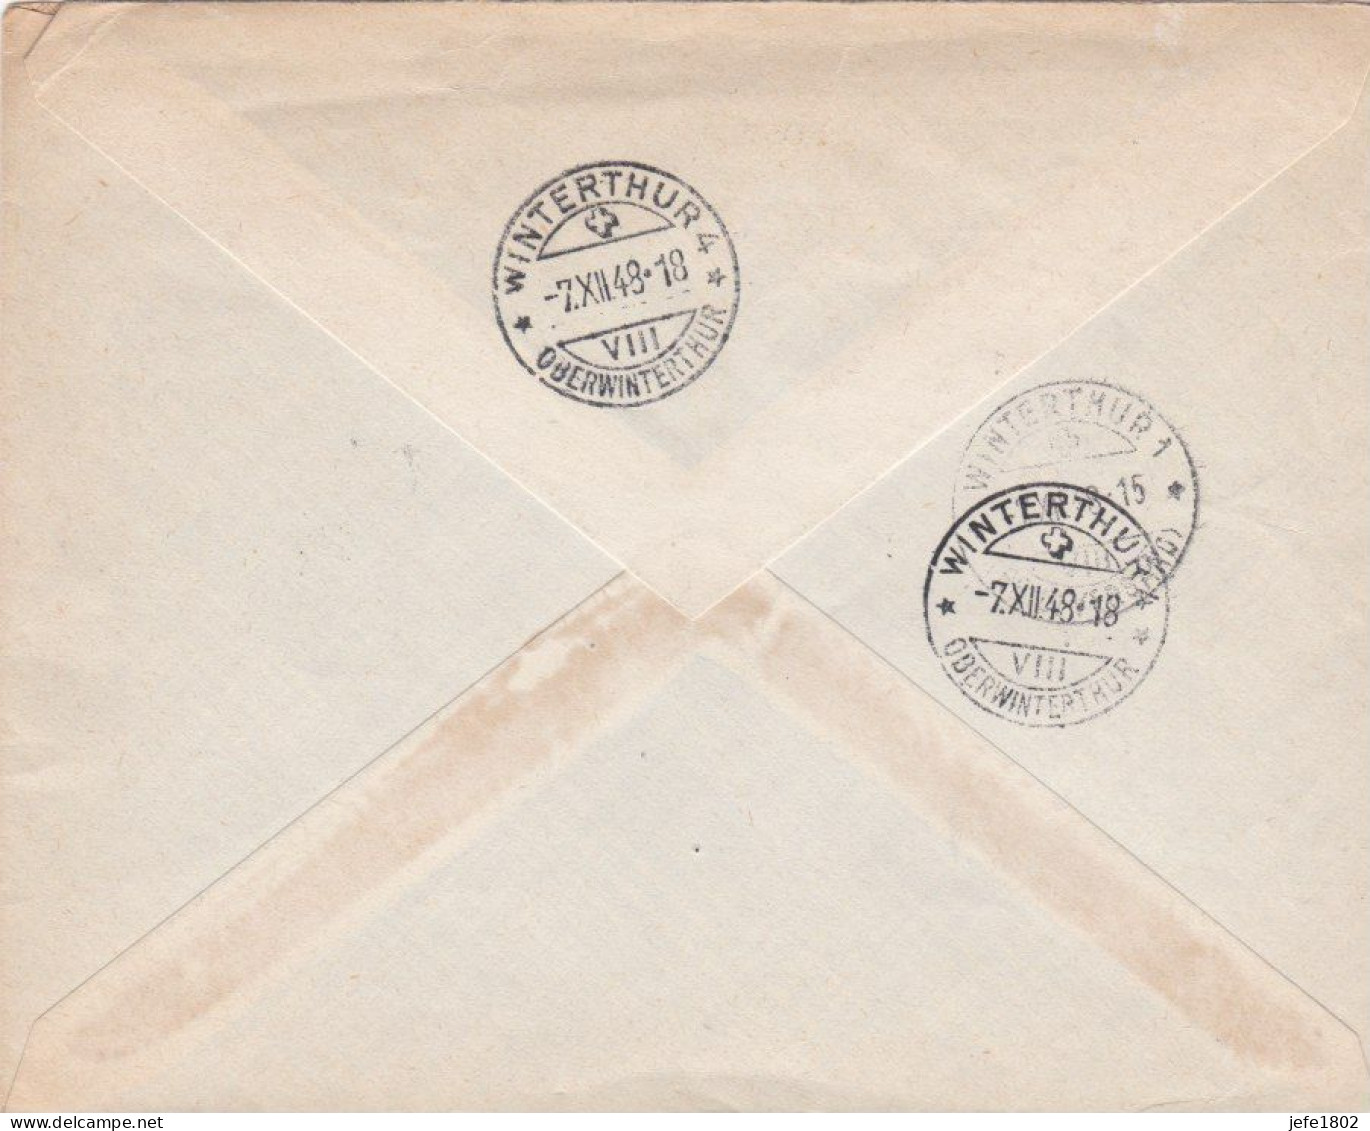 HEKLA 1947 On Registered Mail From Reykjavik To Winterthur - Switzerland (Schweiz) - Brieven En Documenten